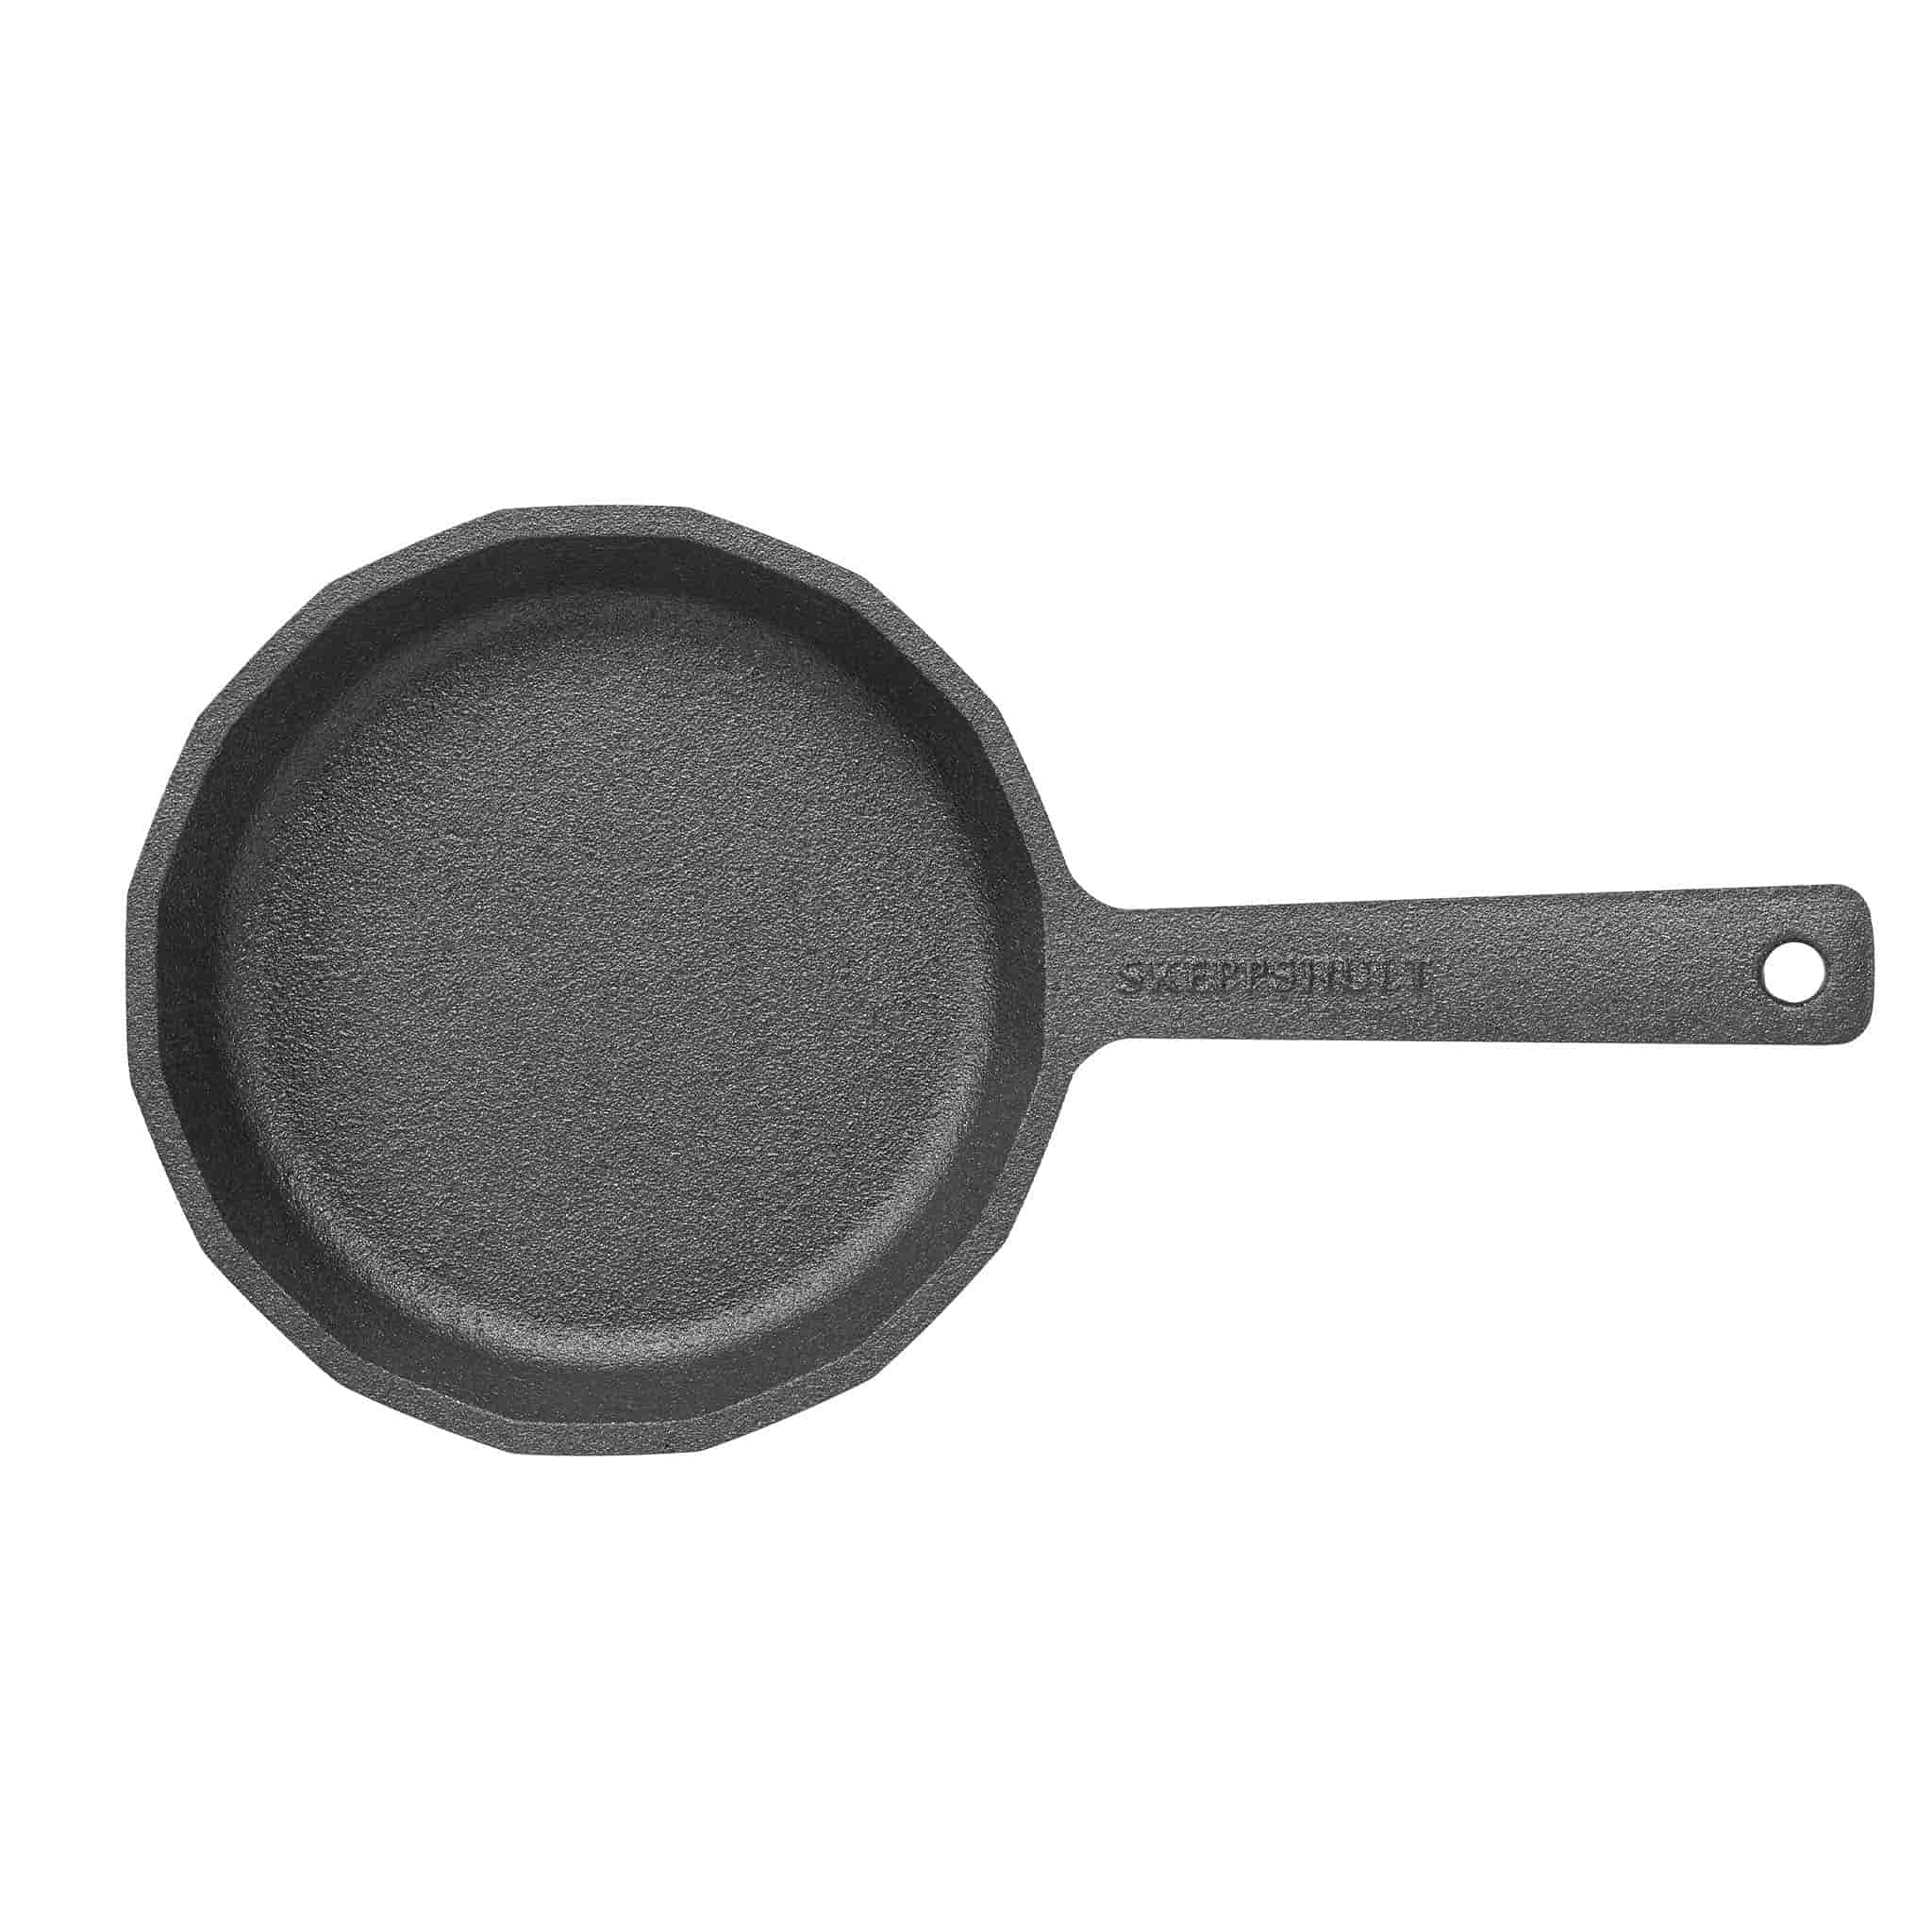 Skeppshult JARN Cast Iron Frying Pan, 15cm